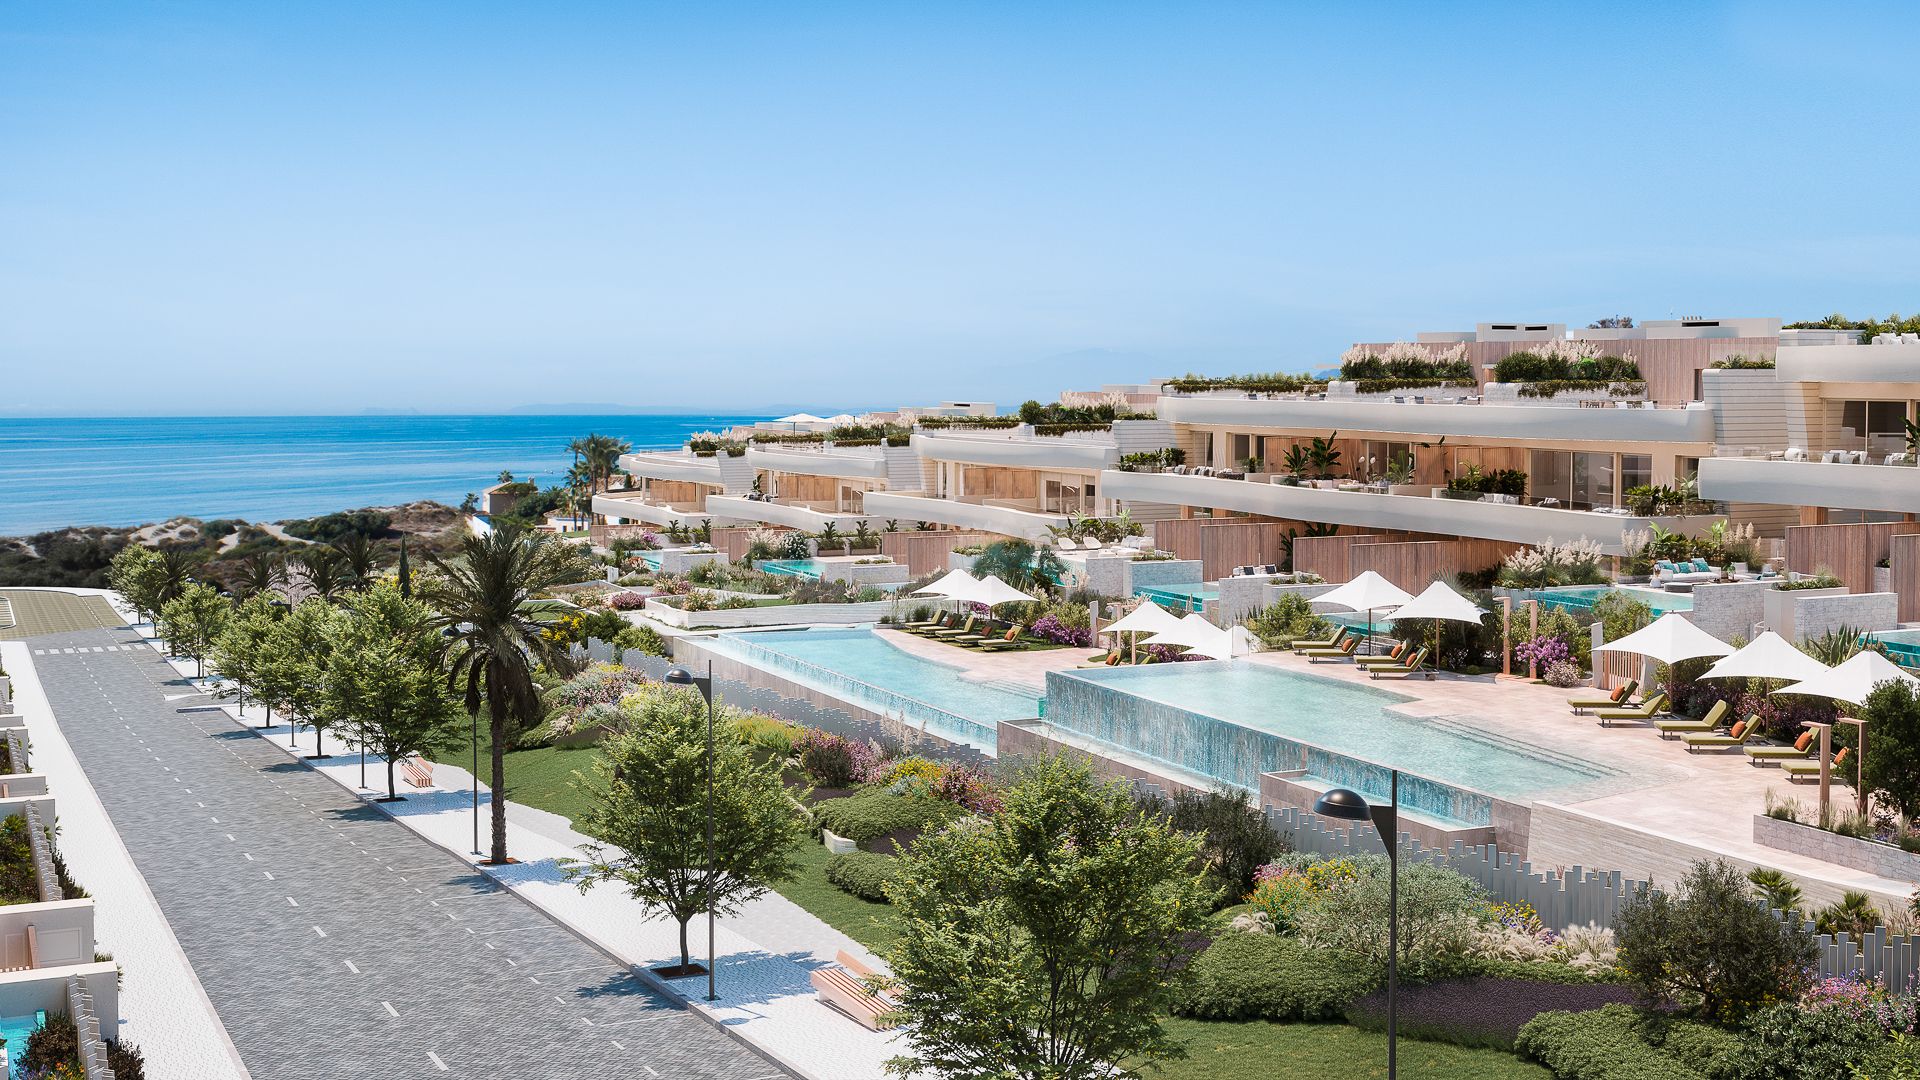 New front line beach resort unique apartment | Engel & Völkers Marbella